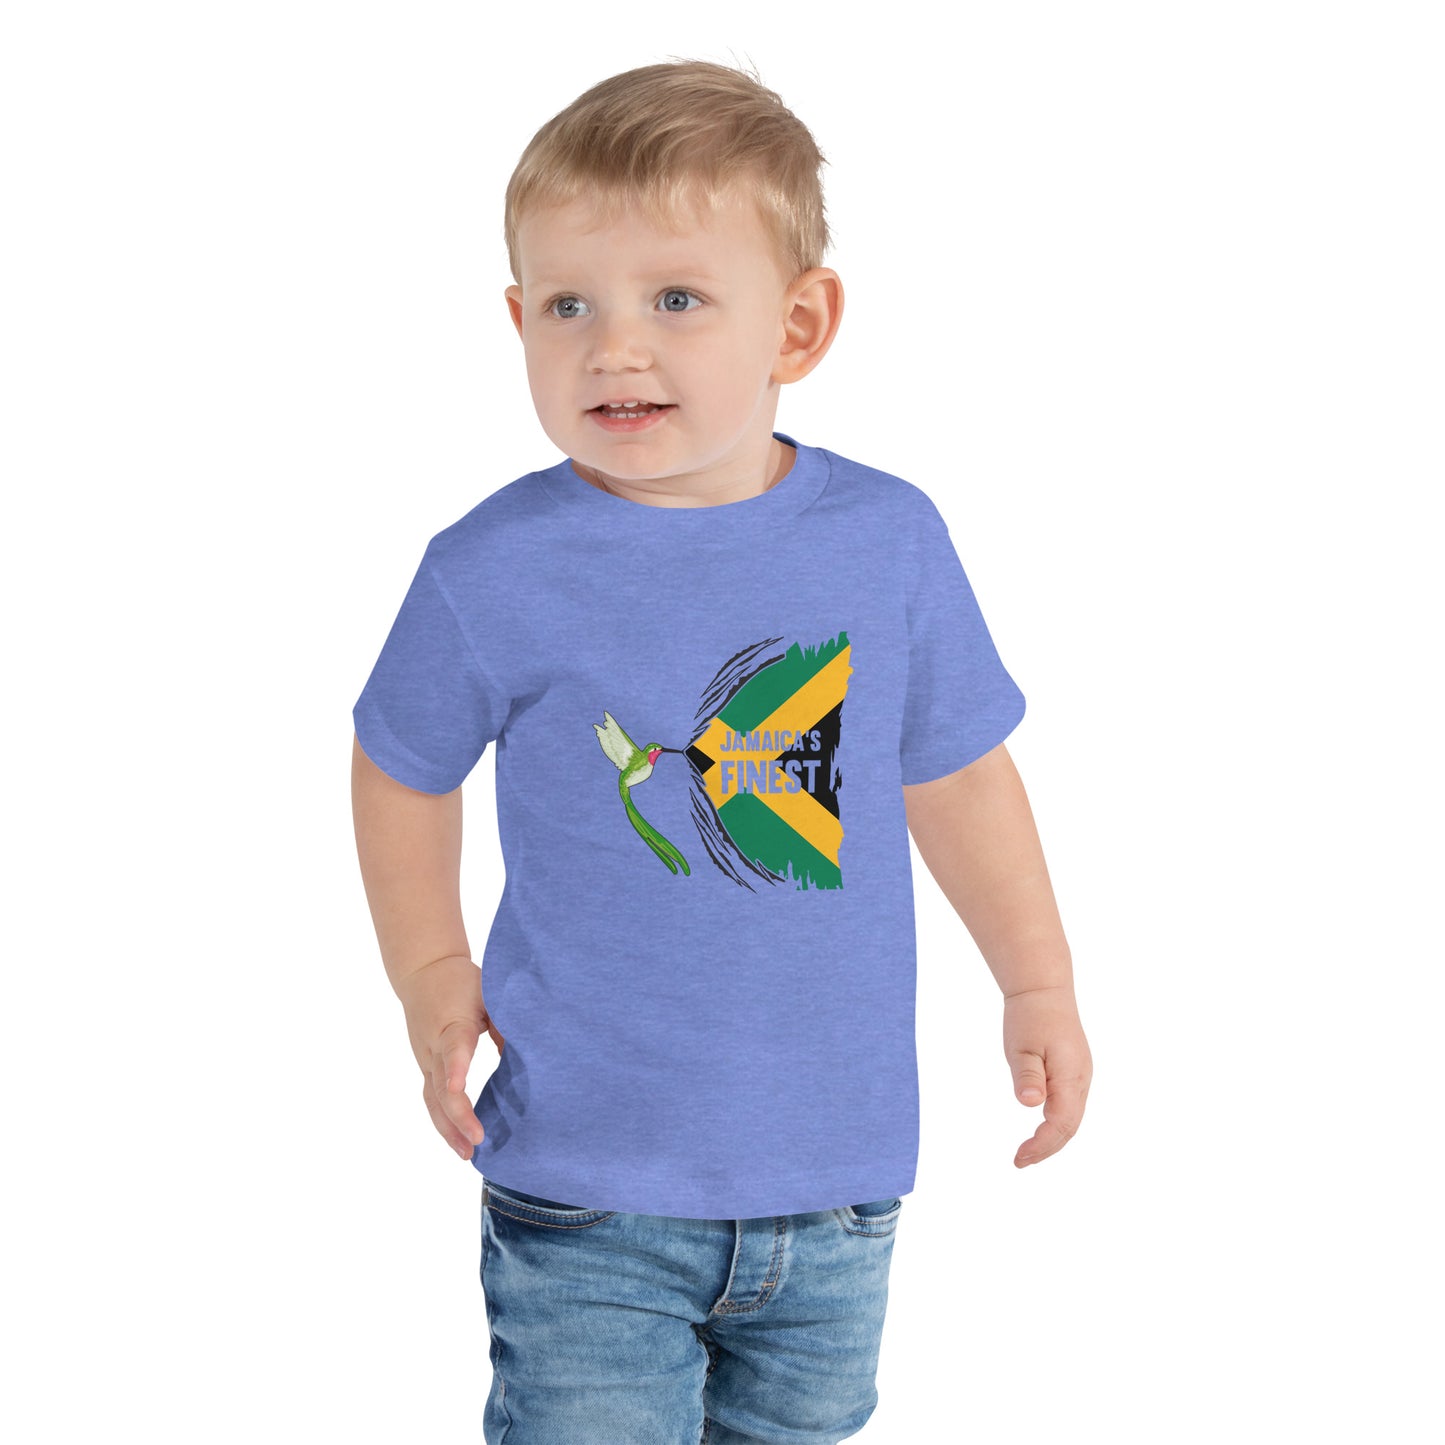 Toddler Short Sleeve "Jamaica's Finest" Tee